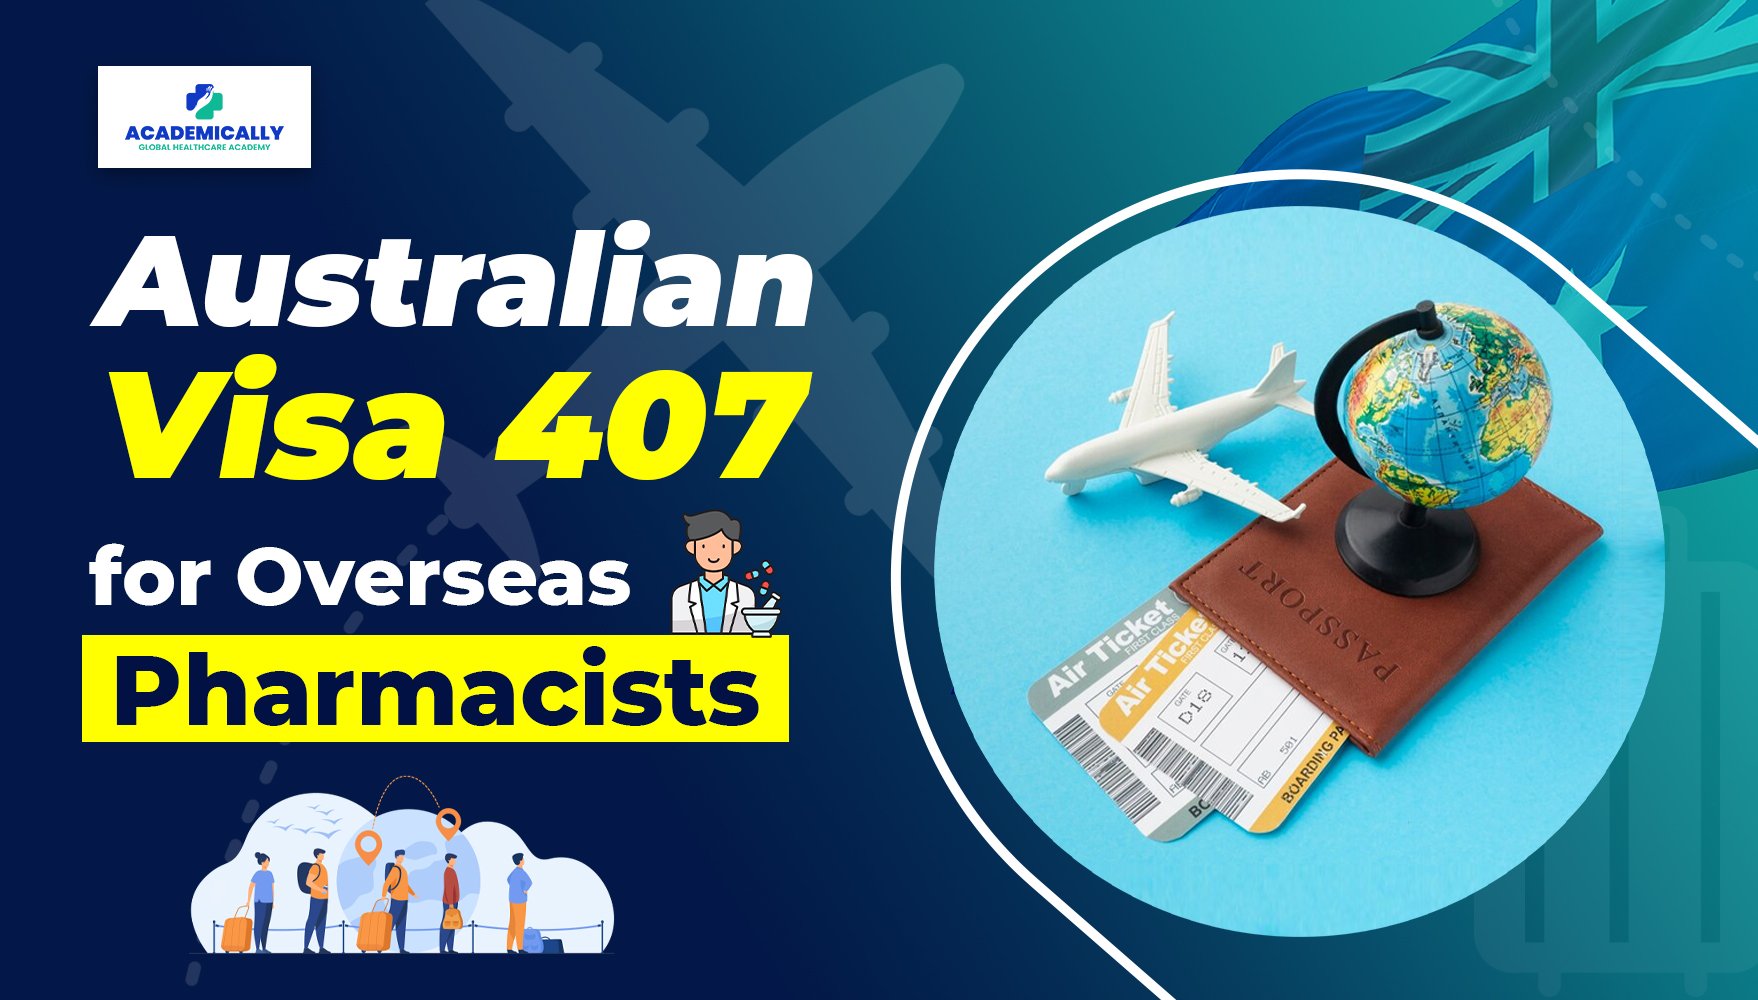 Australia's Visa 407 for Overseas Pharmacists